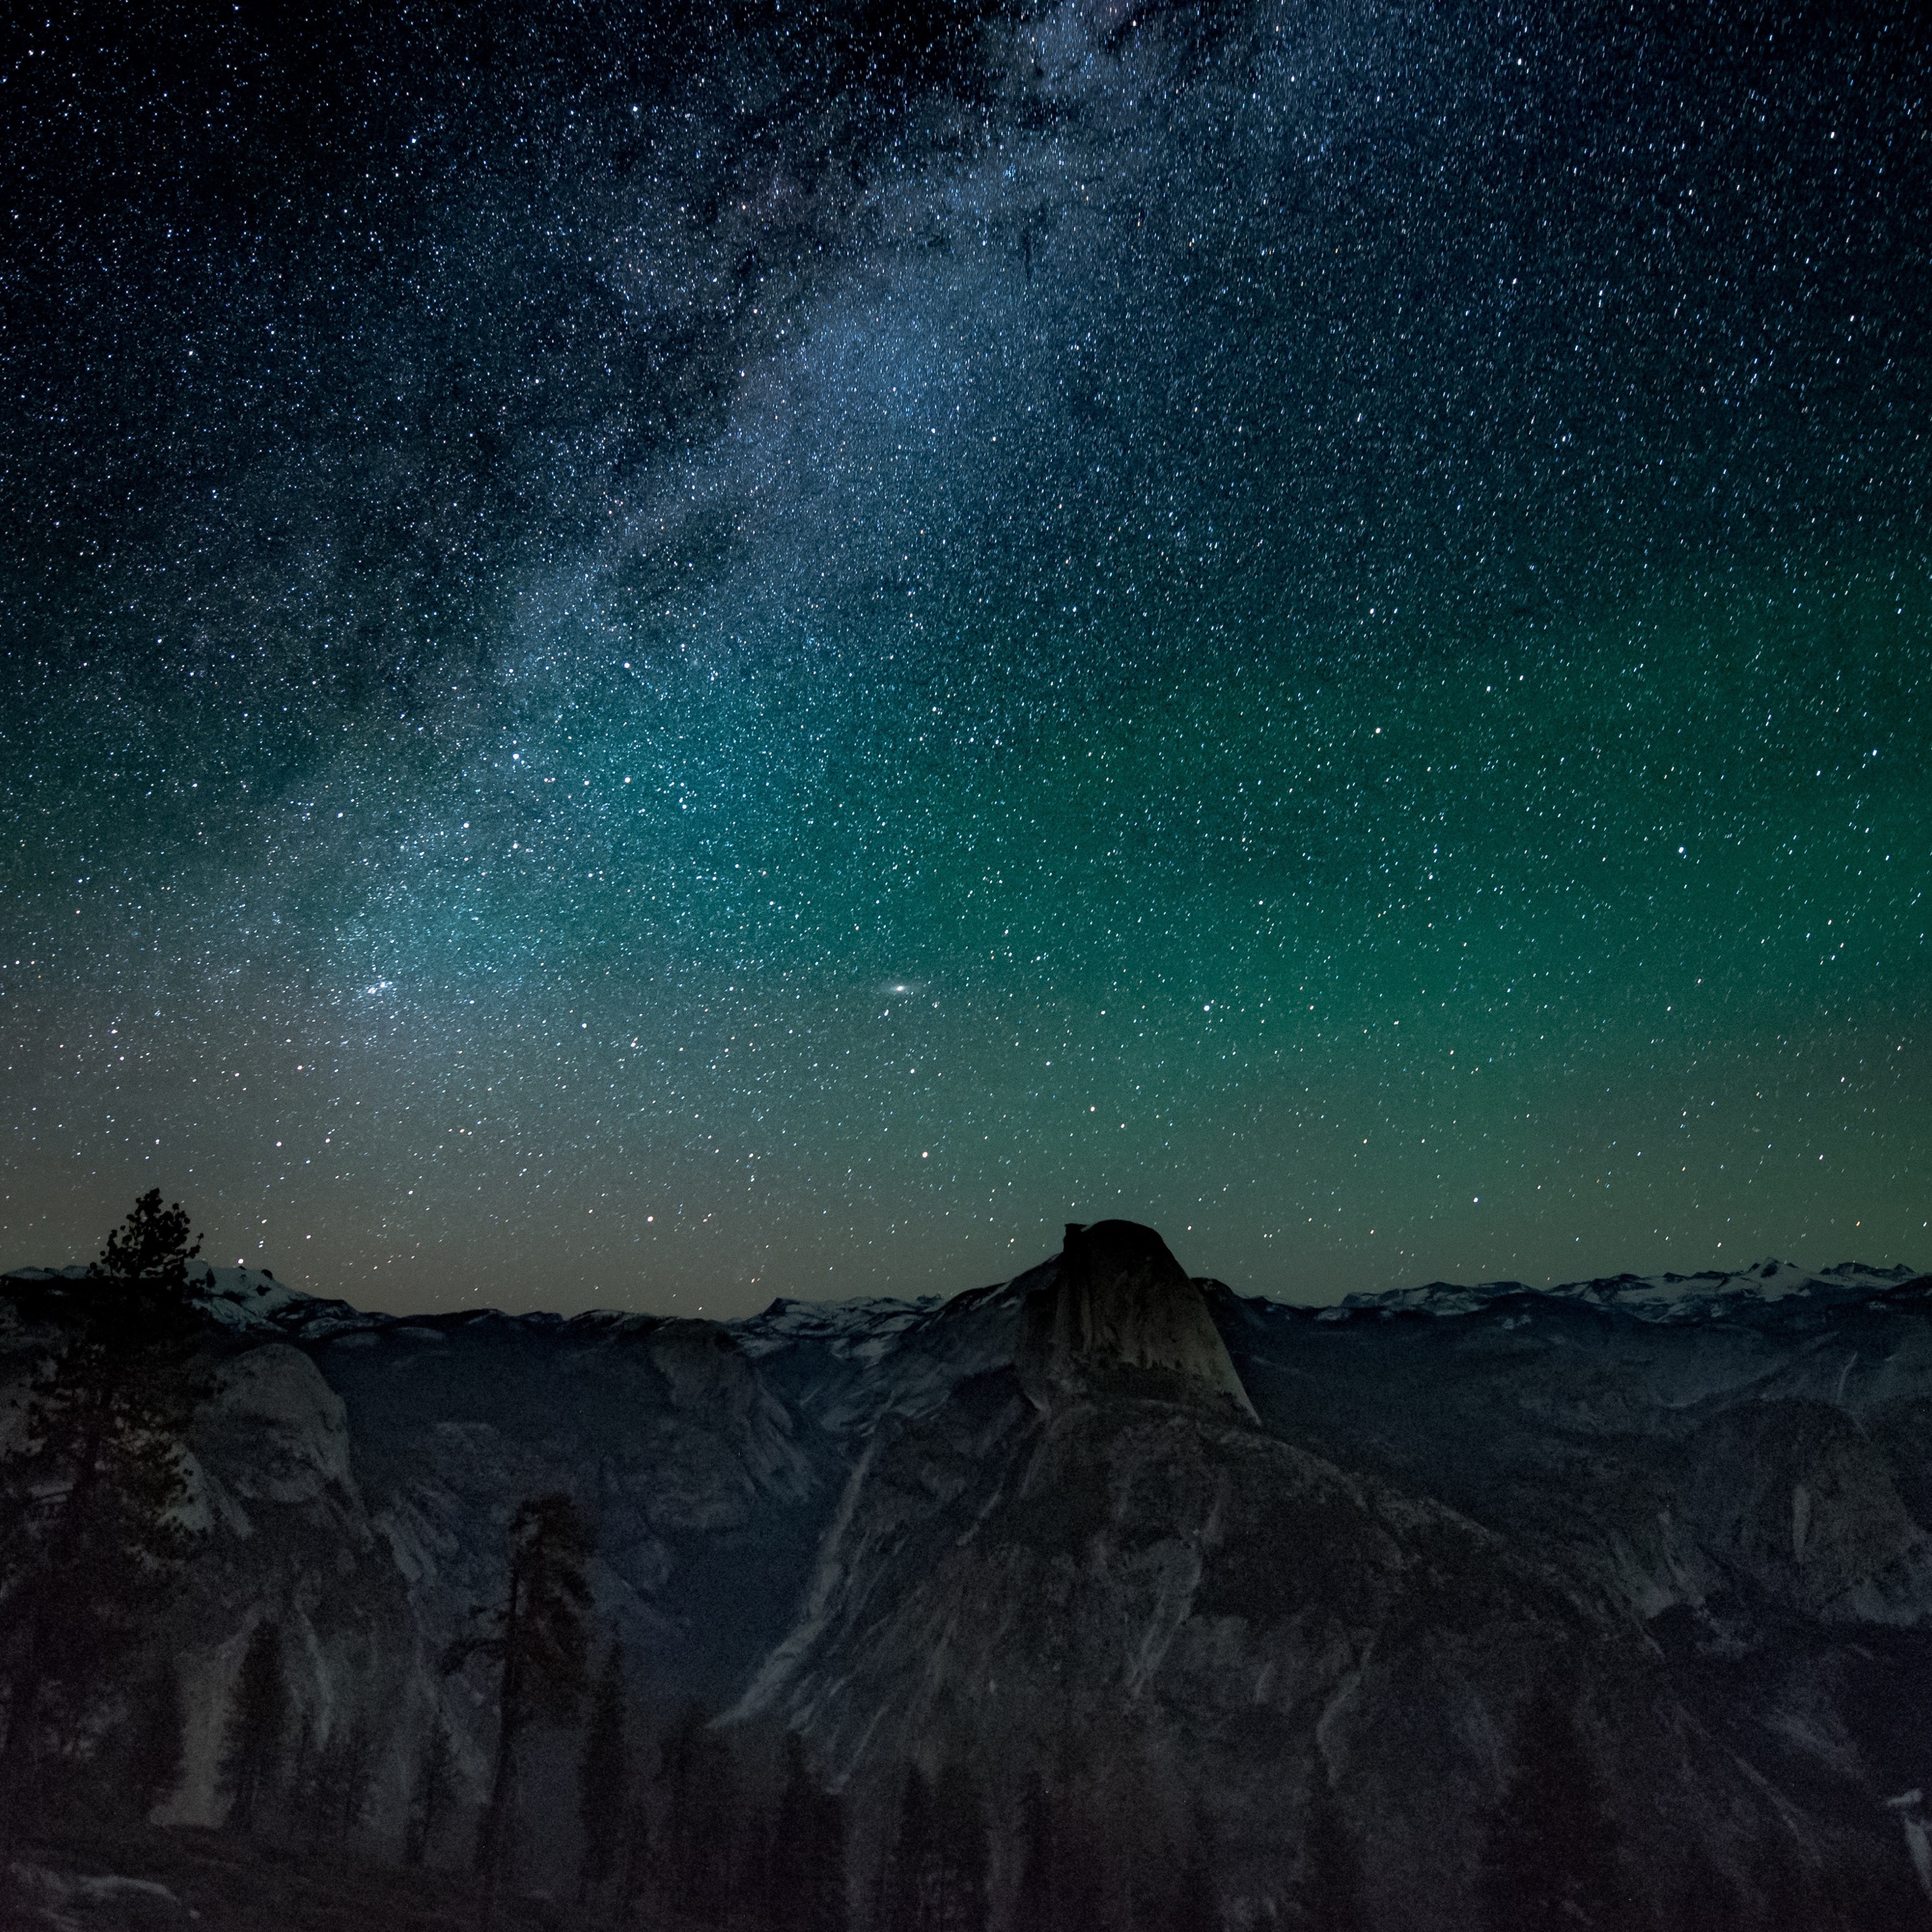 Wallpaper Weekends Night Sky Over Yosemite For Mac Ipad Iphone